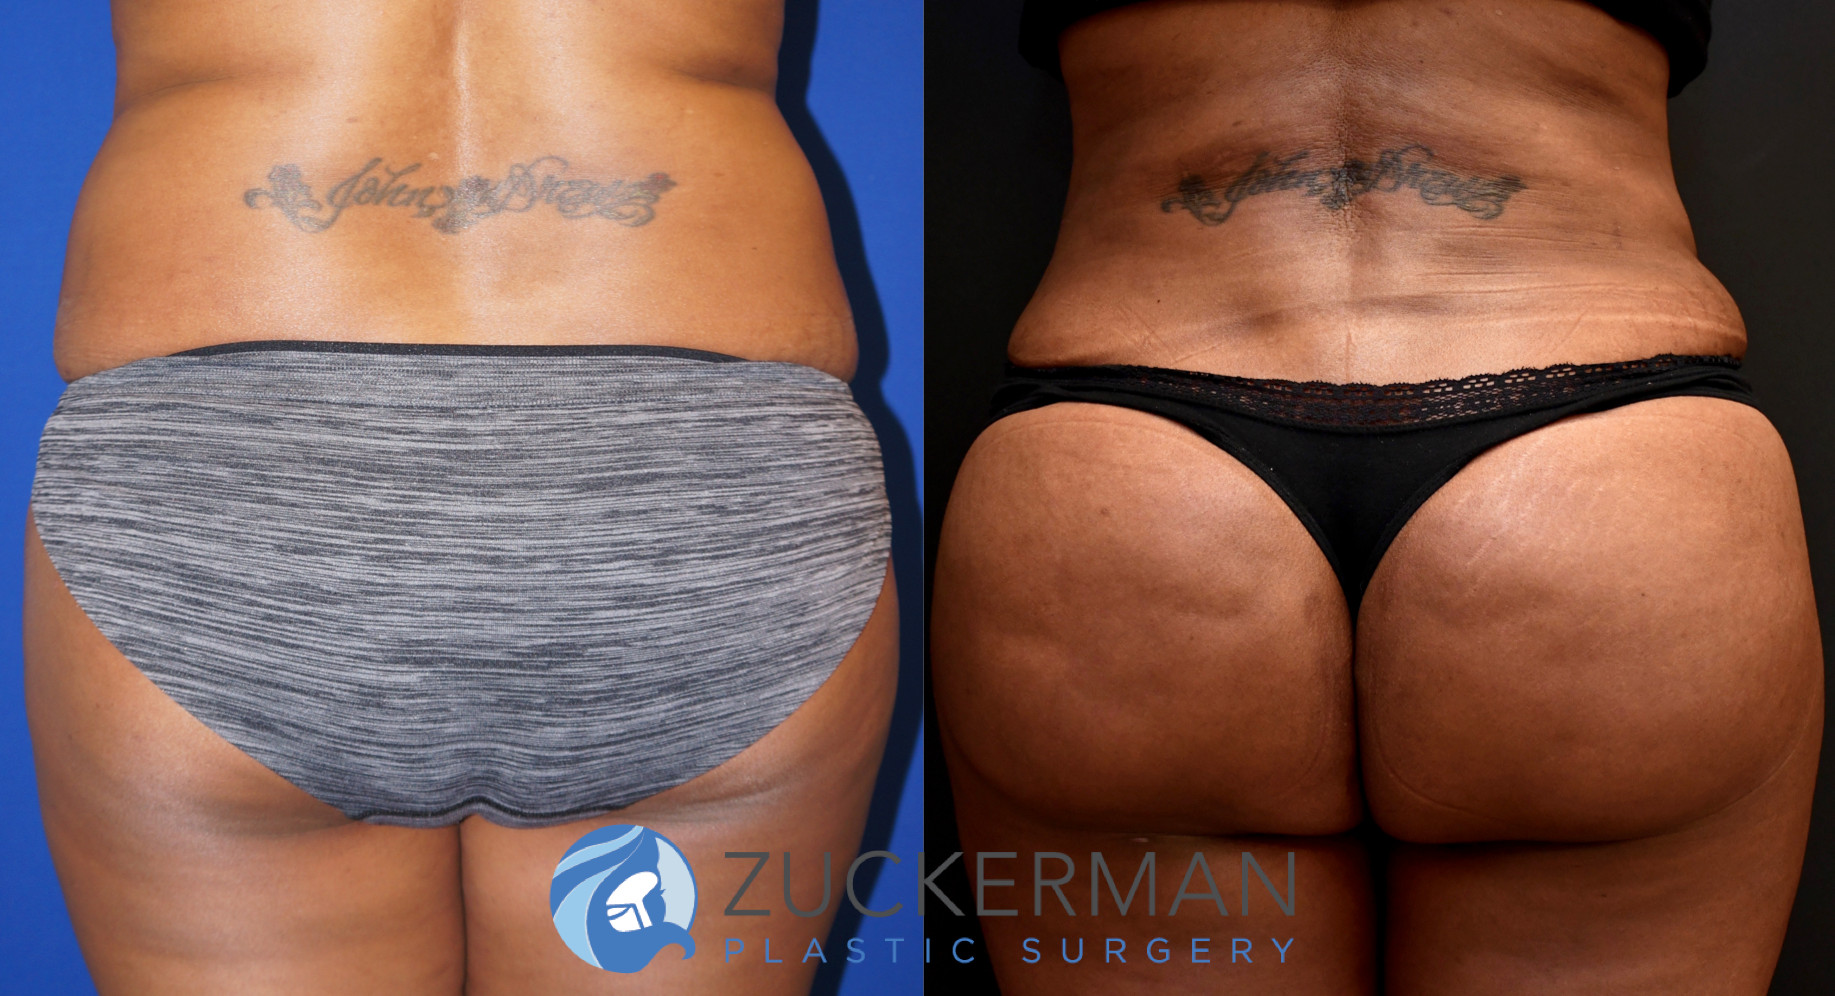 brazilian butt lift, bbl, buttock augmentation, 7, before and after, joshua zuckerman posterior view